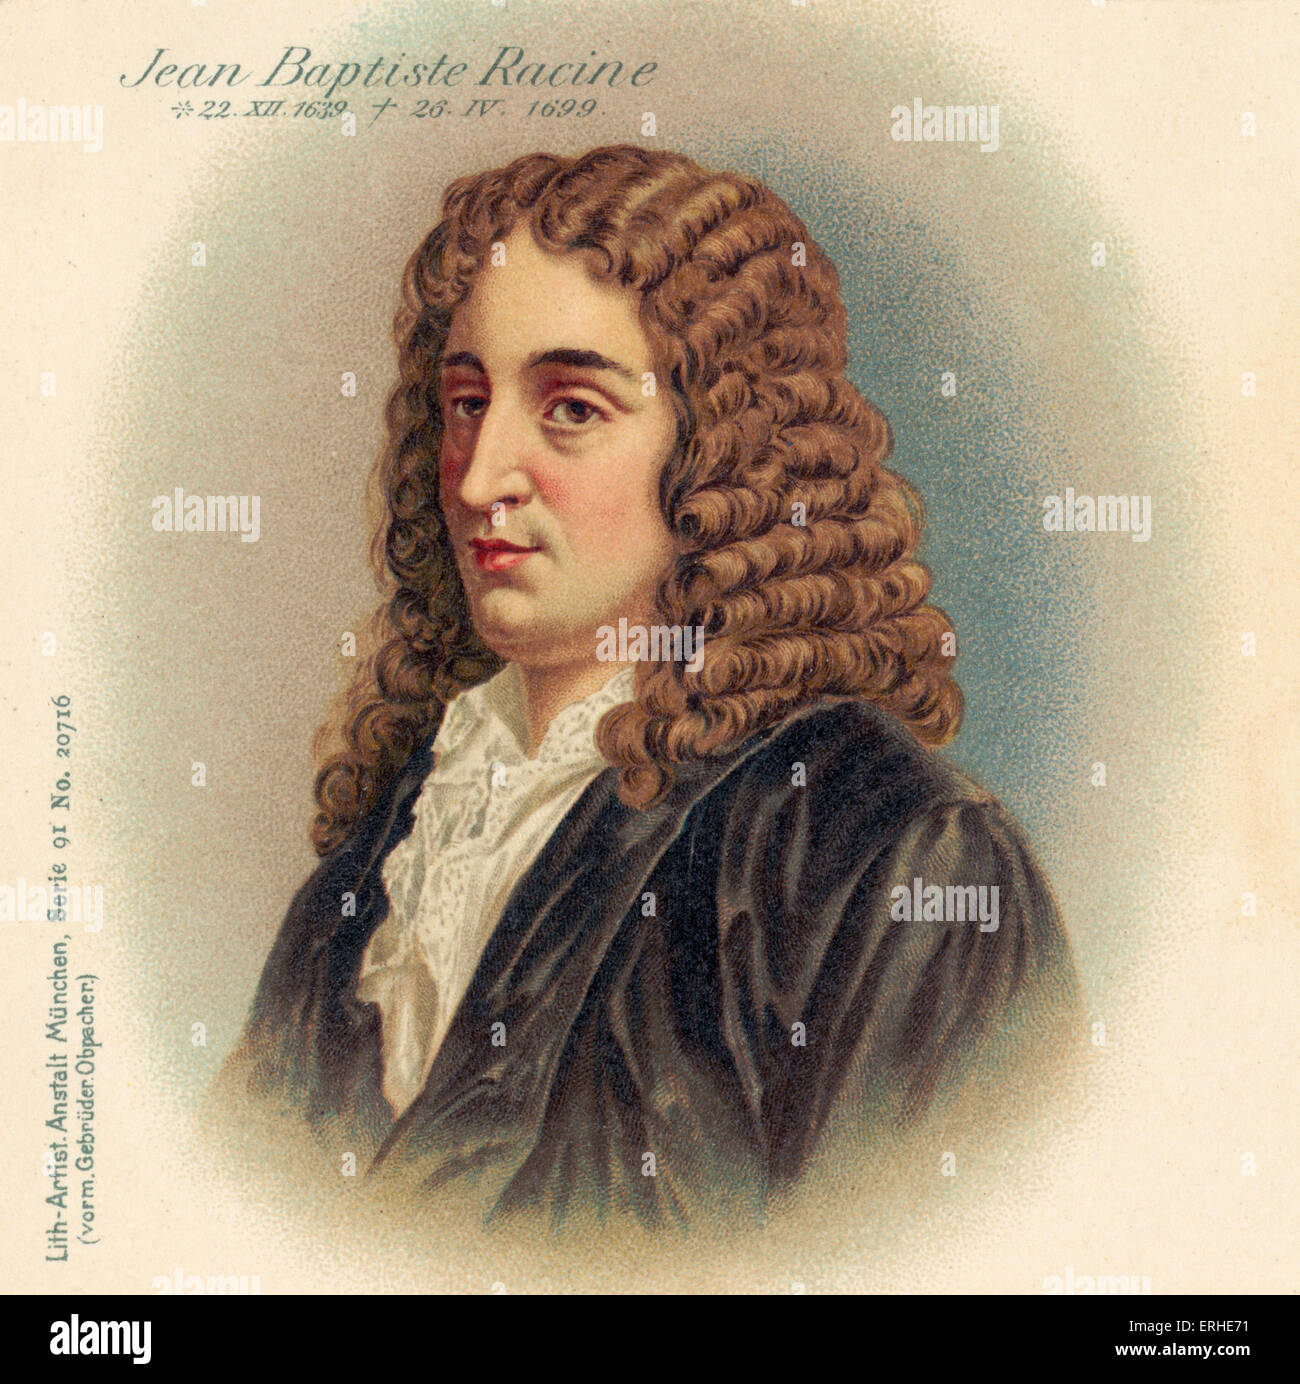 Jean Baptiste Racine, Portrait. Französischer Dramatiker 22. Dezember 1639 - 26. April 1699 Stockfoto